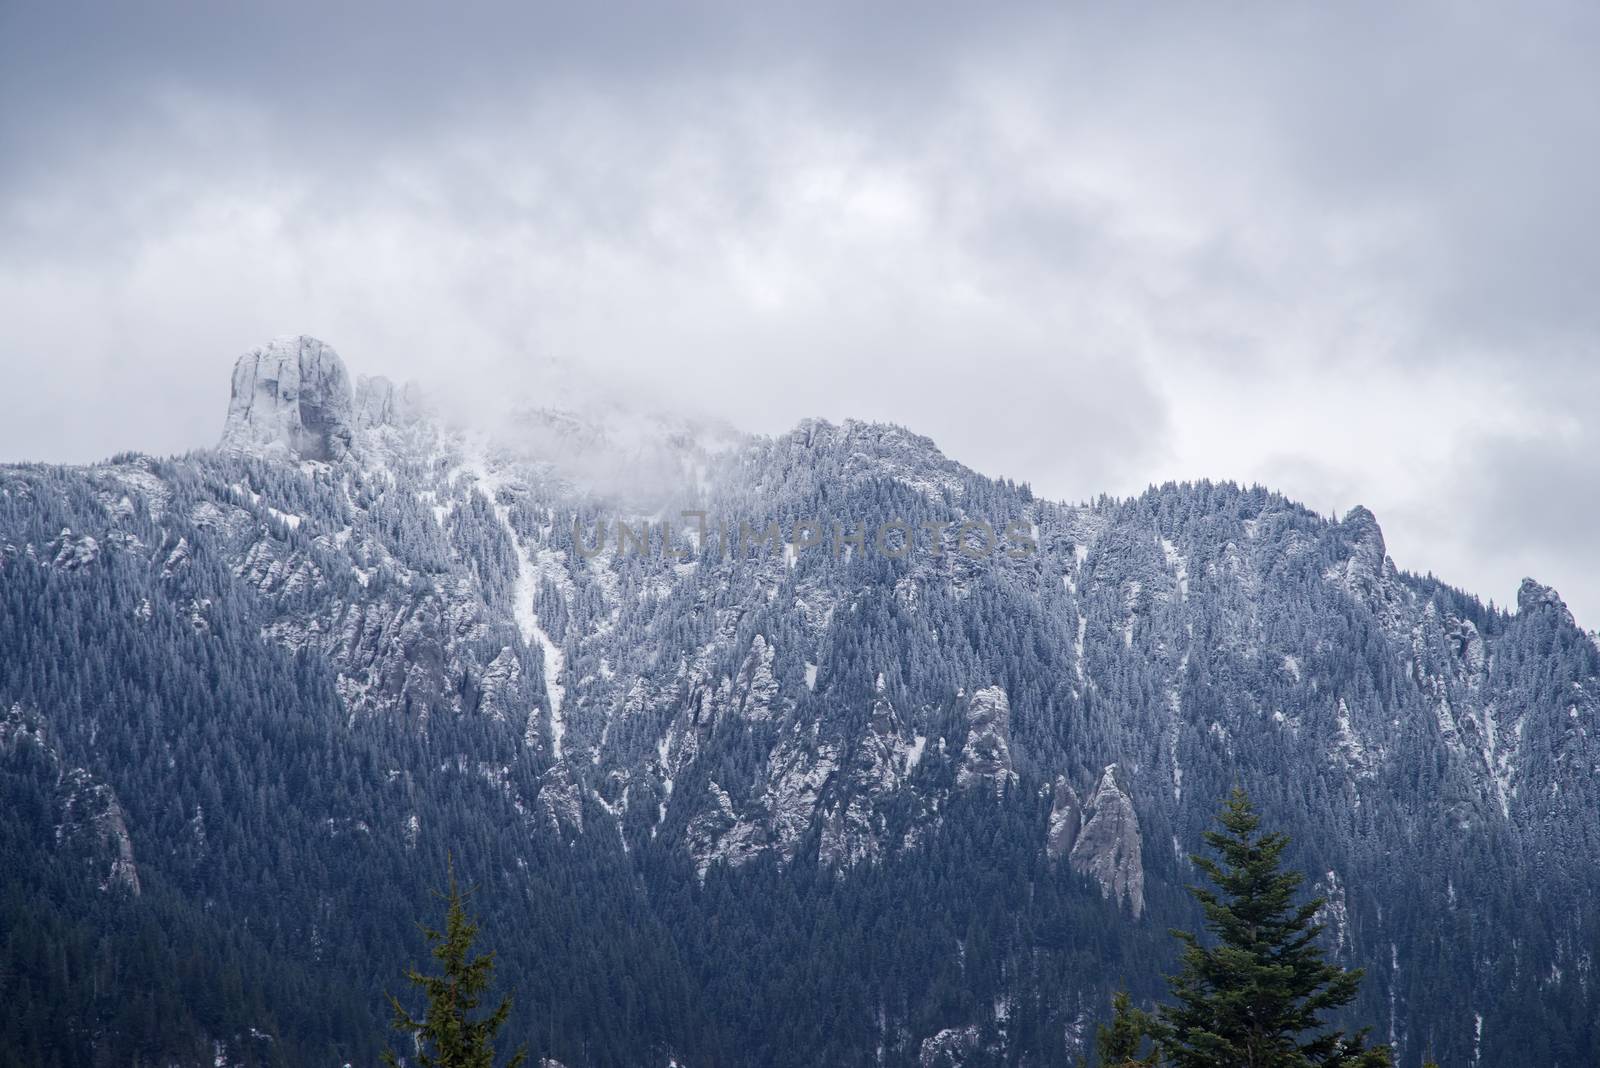 New snow cover on mountain summit, white rocky mountain in Romanian Carpathians.